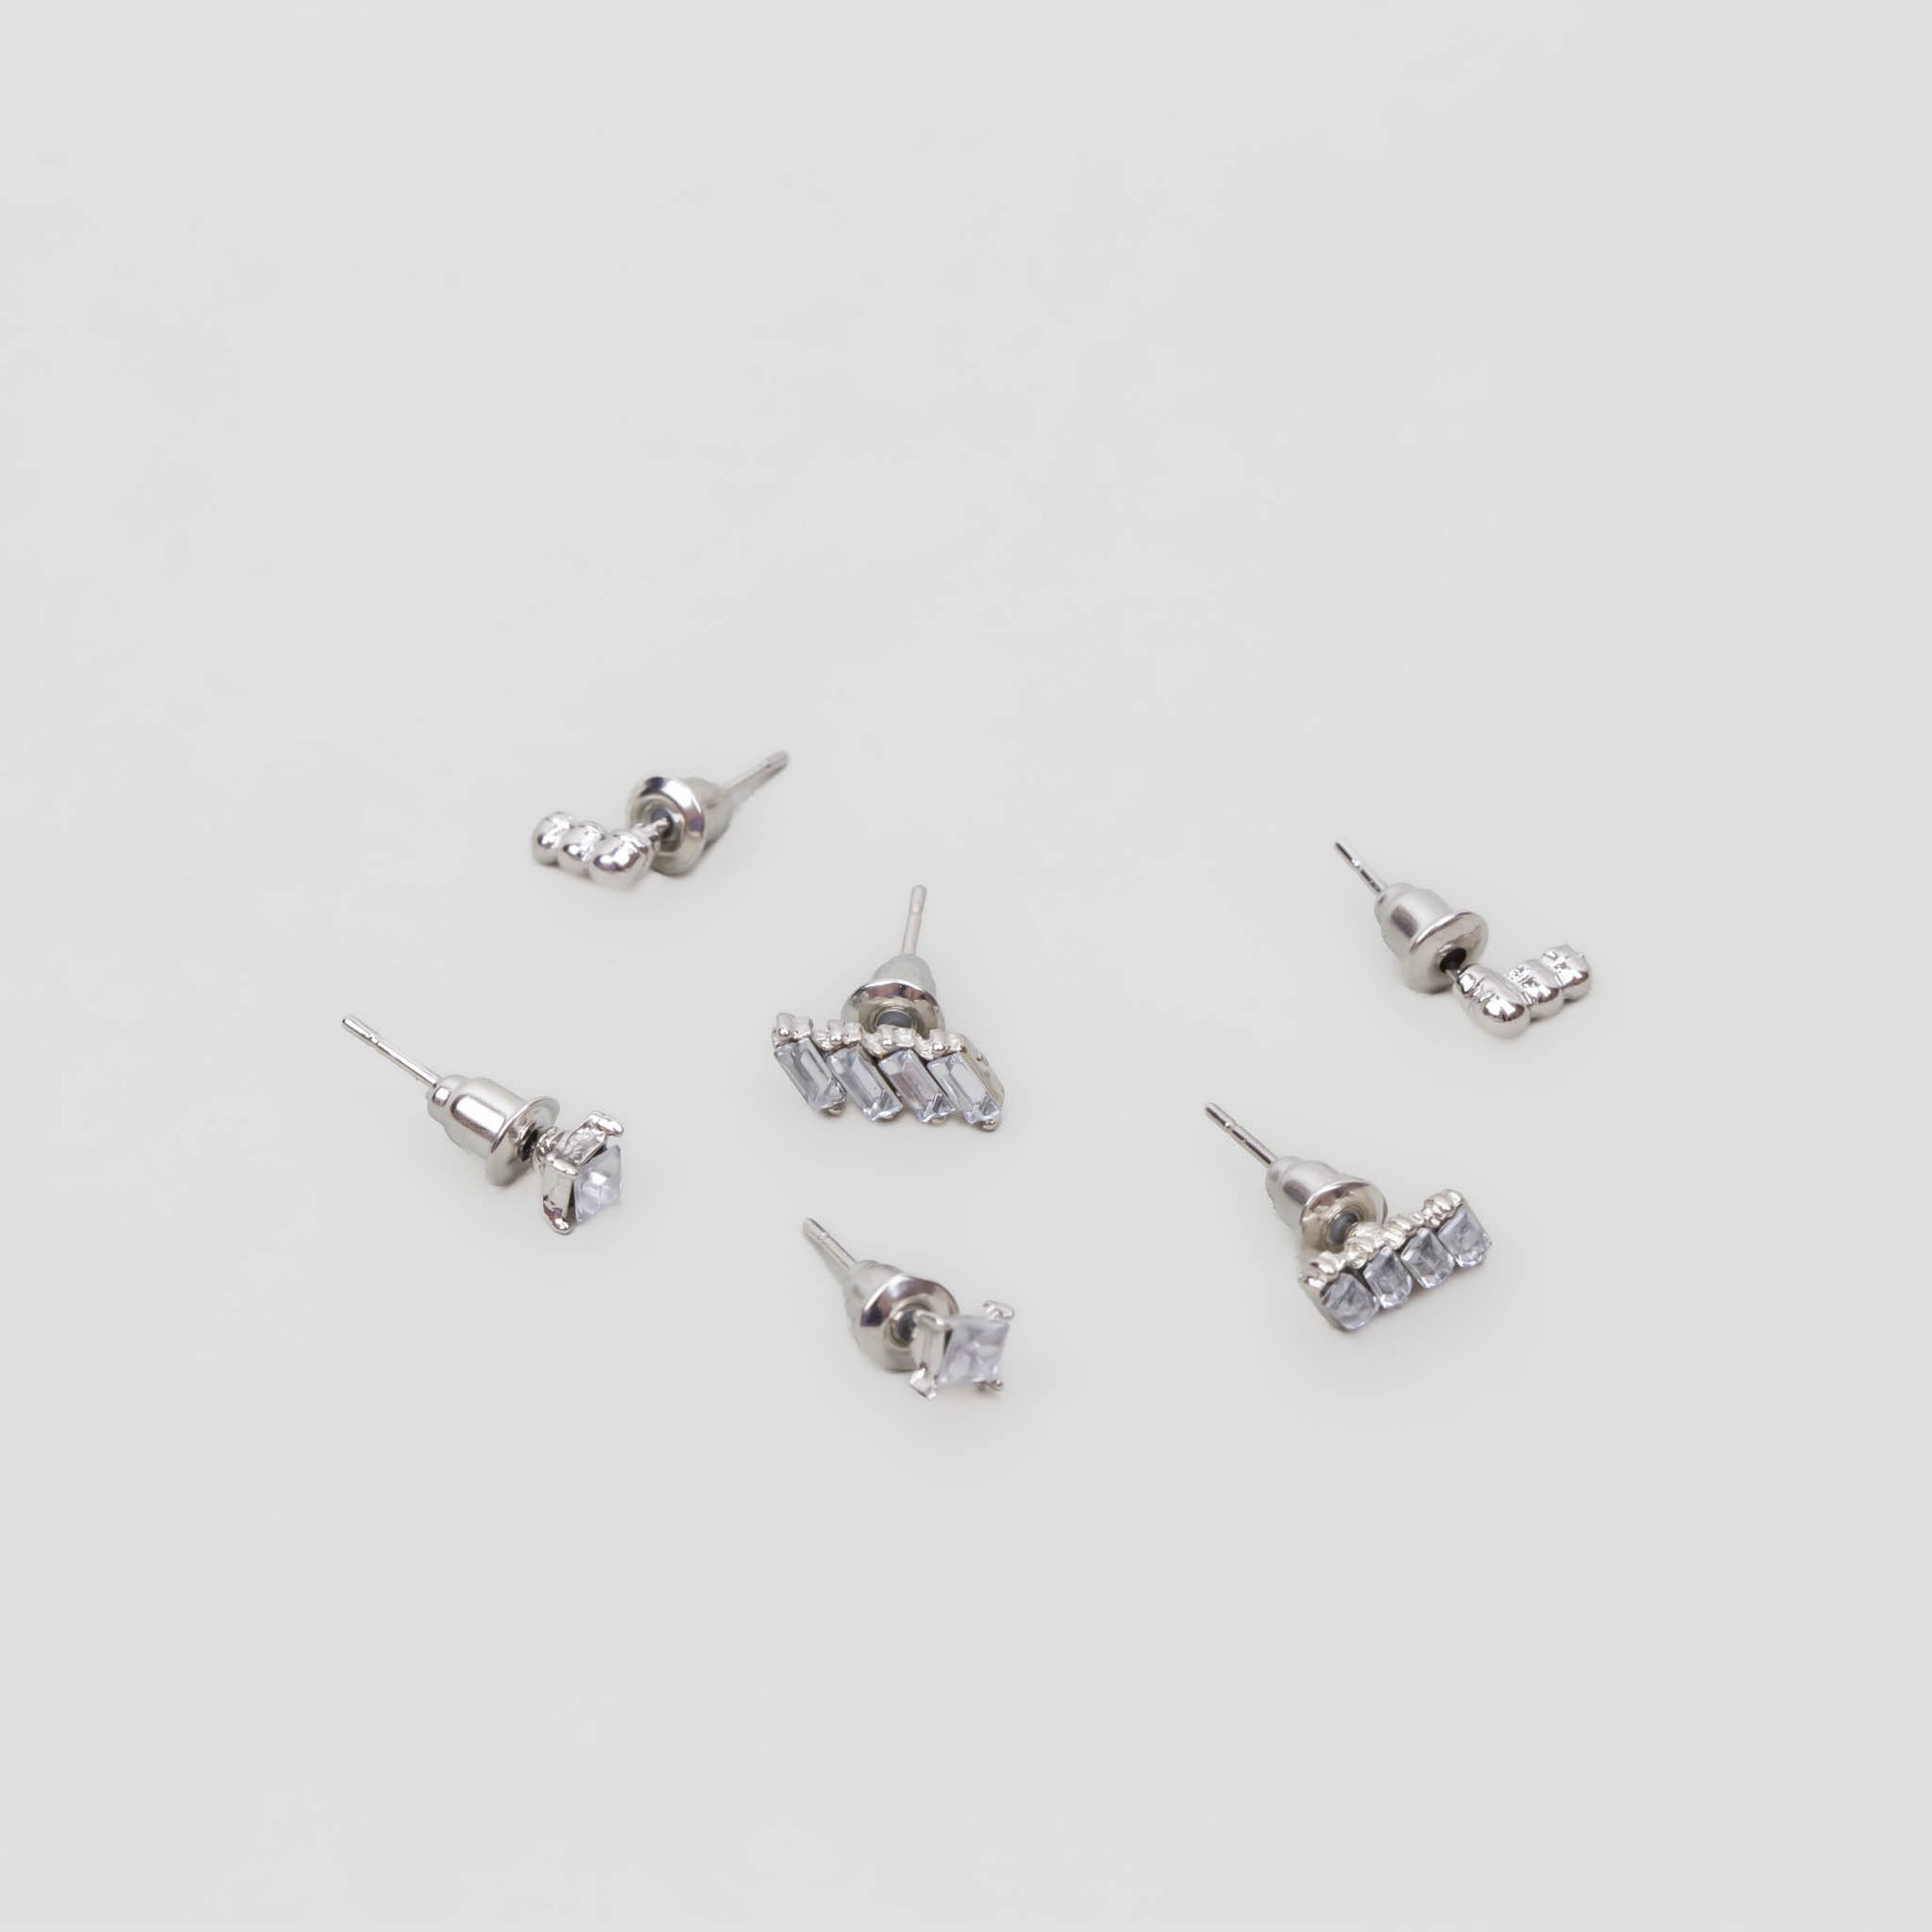 Cercei mici argintii cu pietre și biluțe discrete, set 3 buc